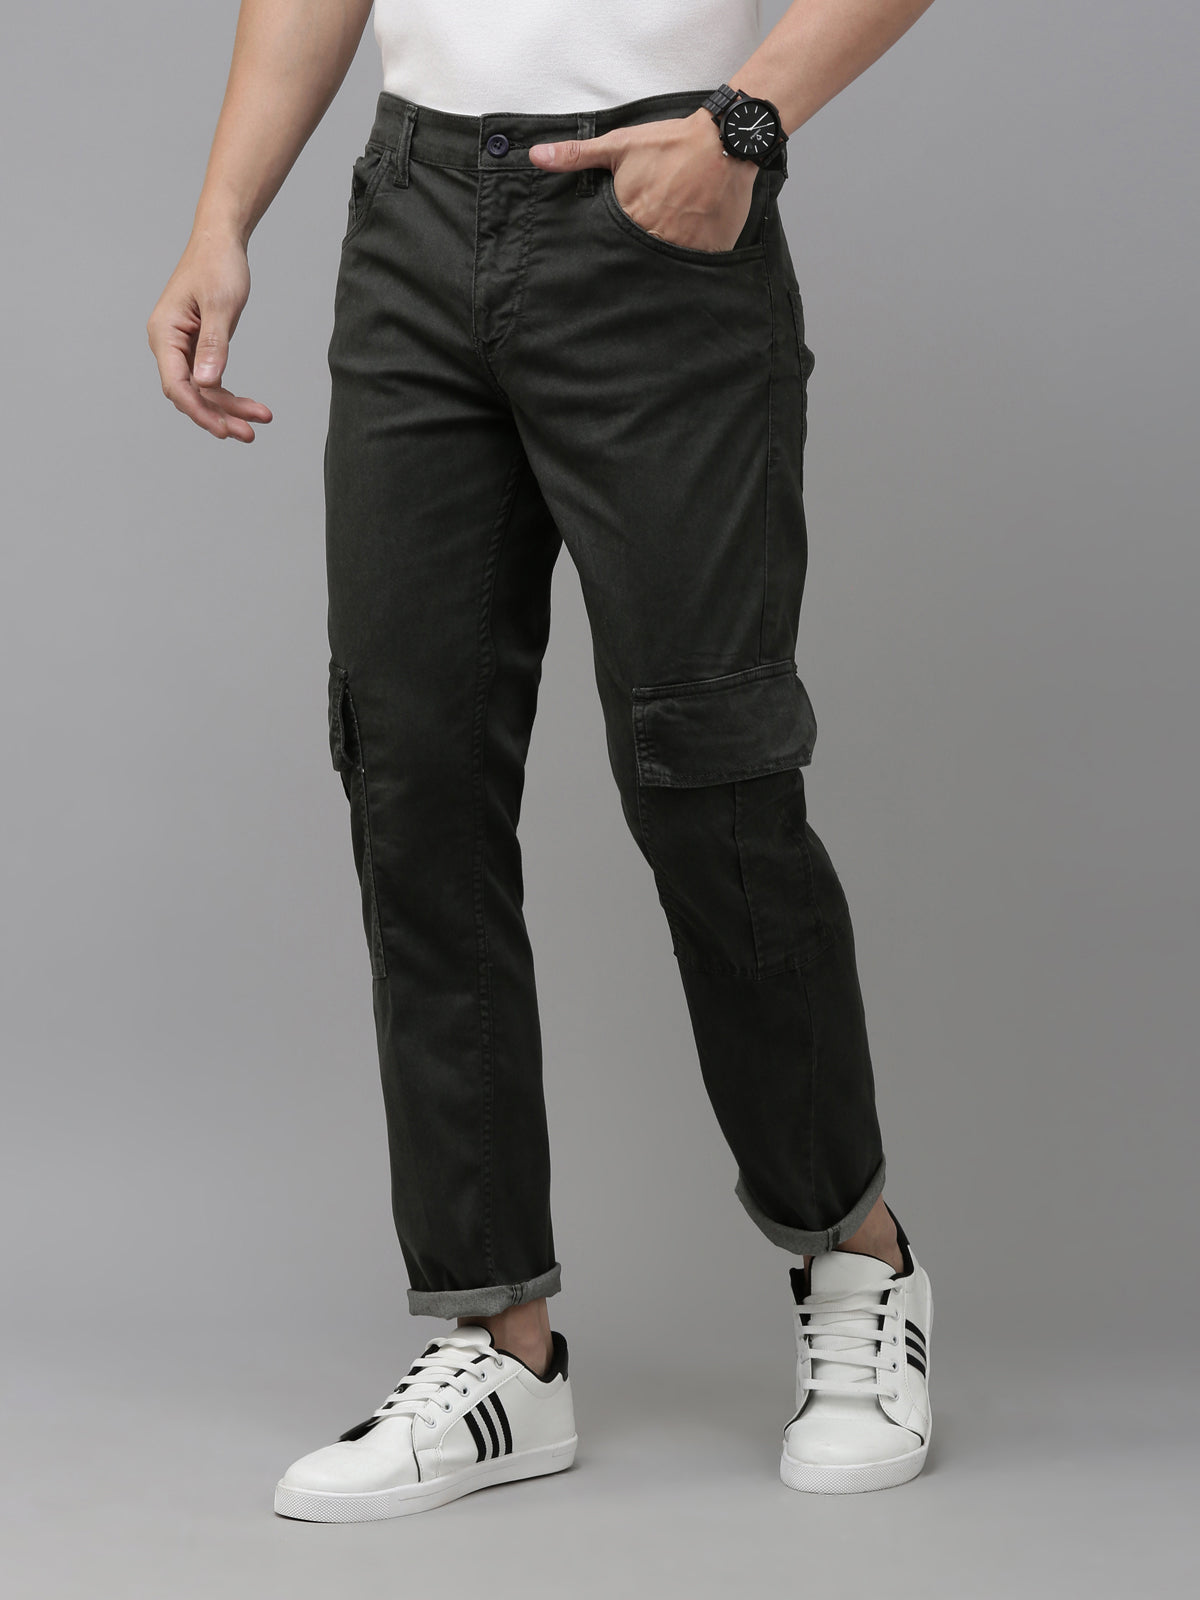 Buy ManQ Charcoal Slim Fit Flat Front Trousers for Men's Online @ Tata CLiQ